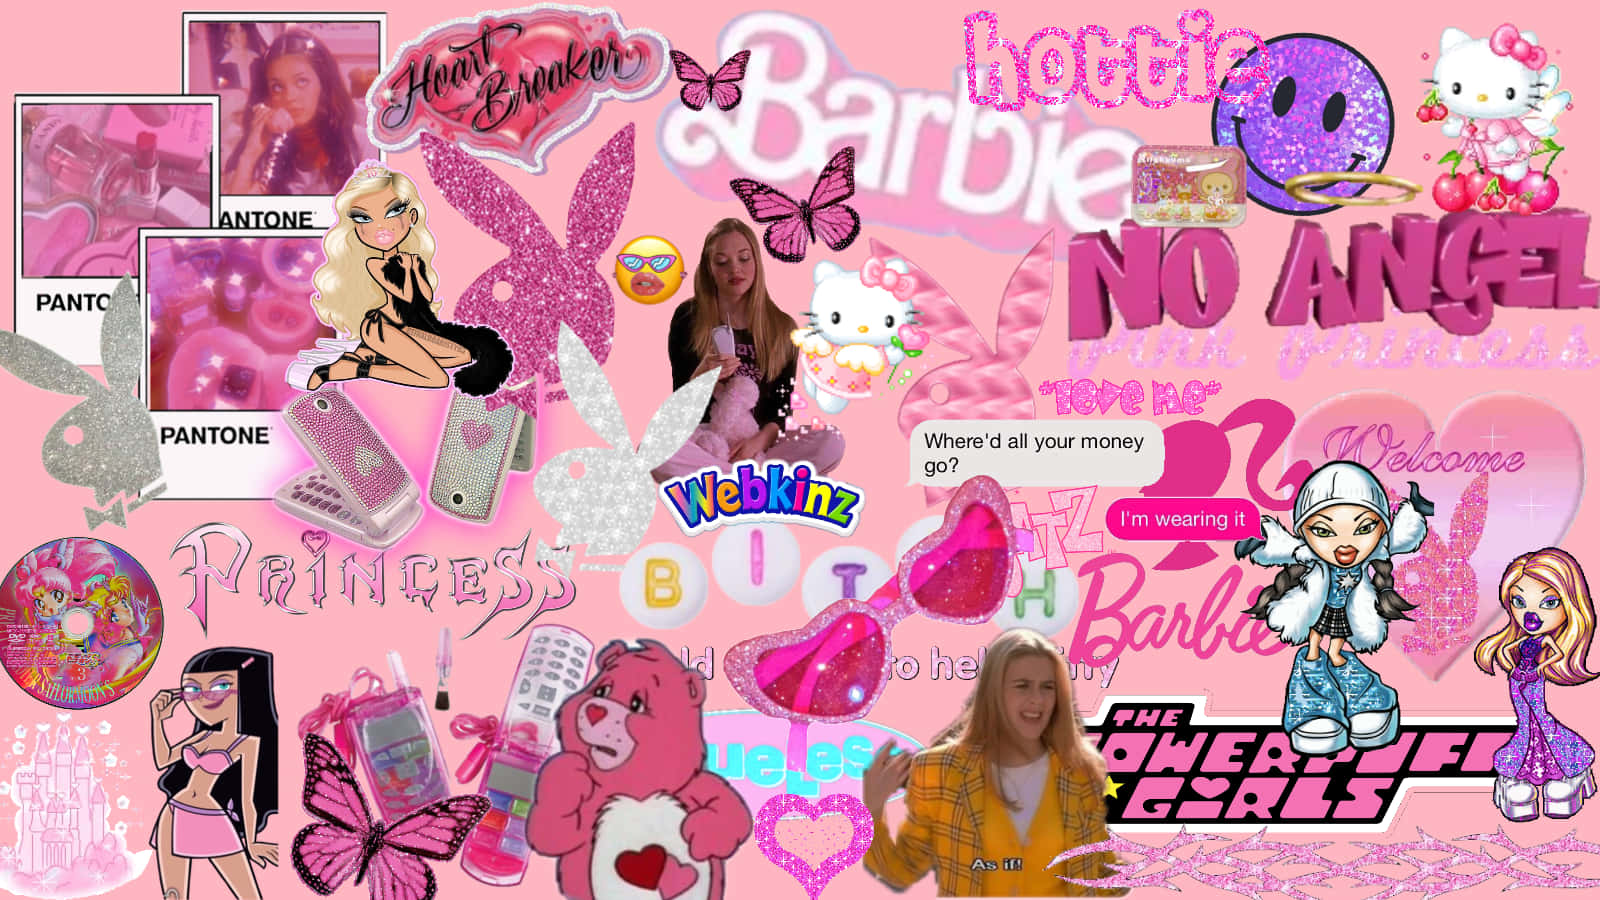 Download Glitter Fire Pink Y2K Background